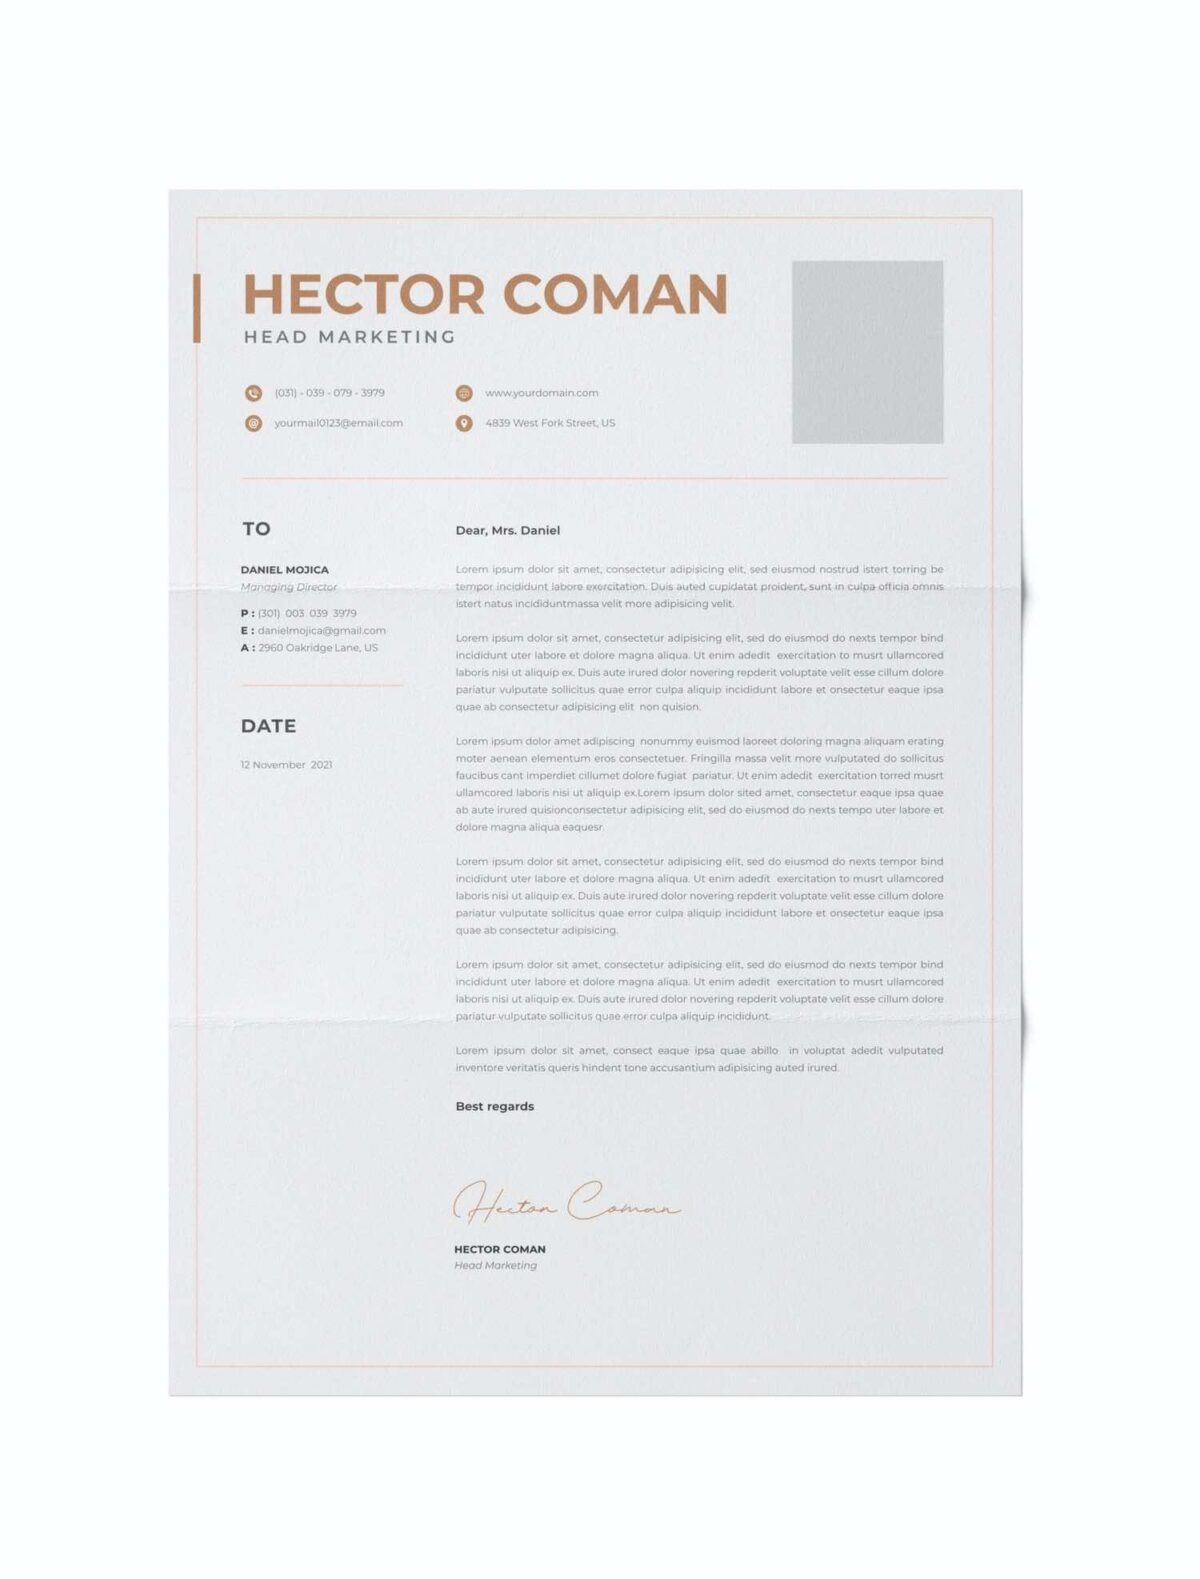 CV #42 Hector Coman (sobre)